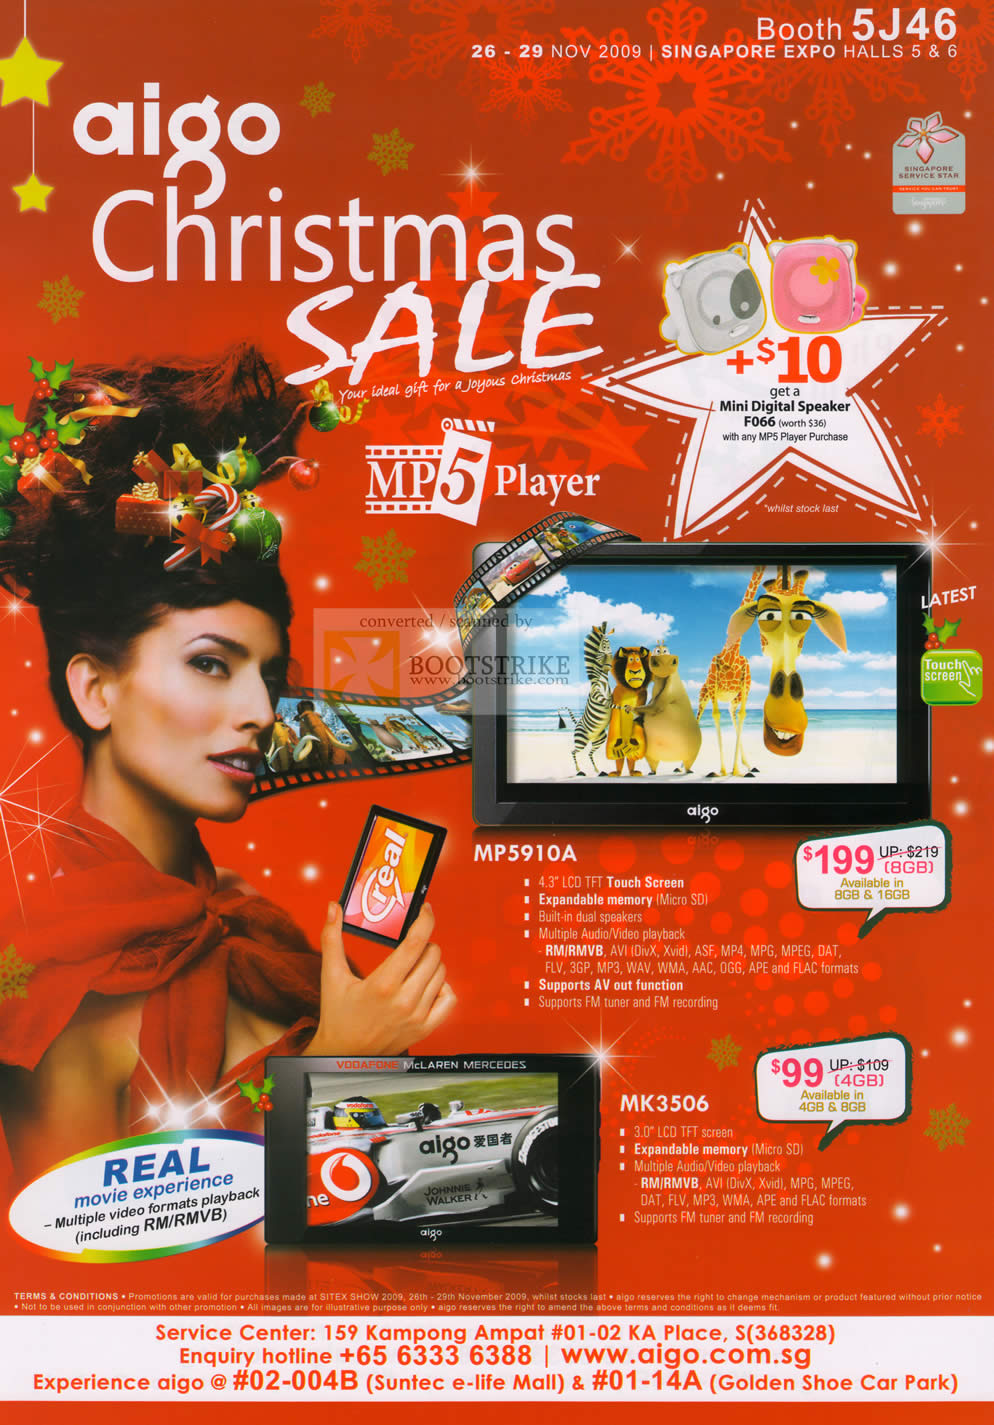 Sitex 2009 price list image brochure of Aigo MP5 Player MP5910A MK3506 RMVB Portable Media Player